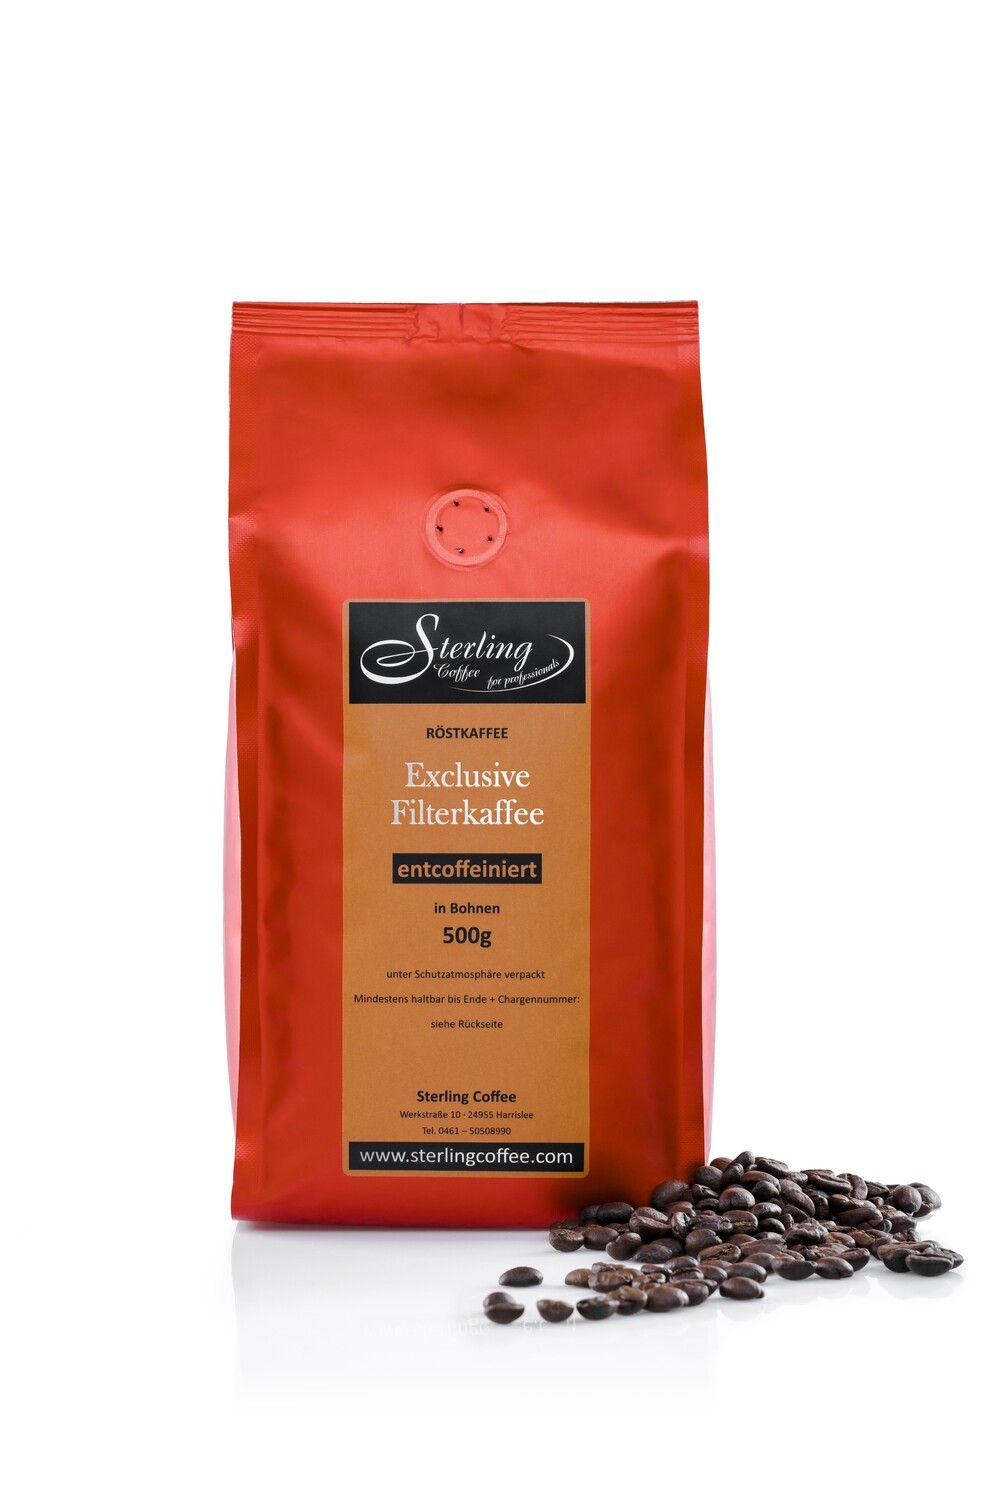 Sterling Coffee Exclusive Filterkaffee, entcoffeiniert
ganze Bohne, 500g